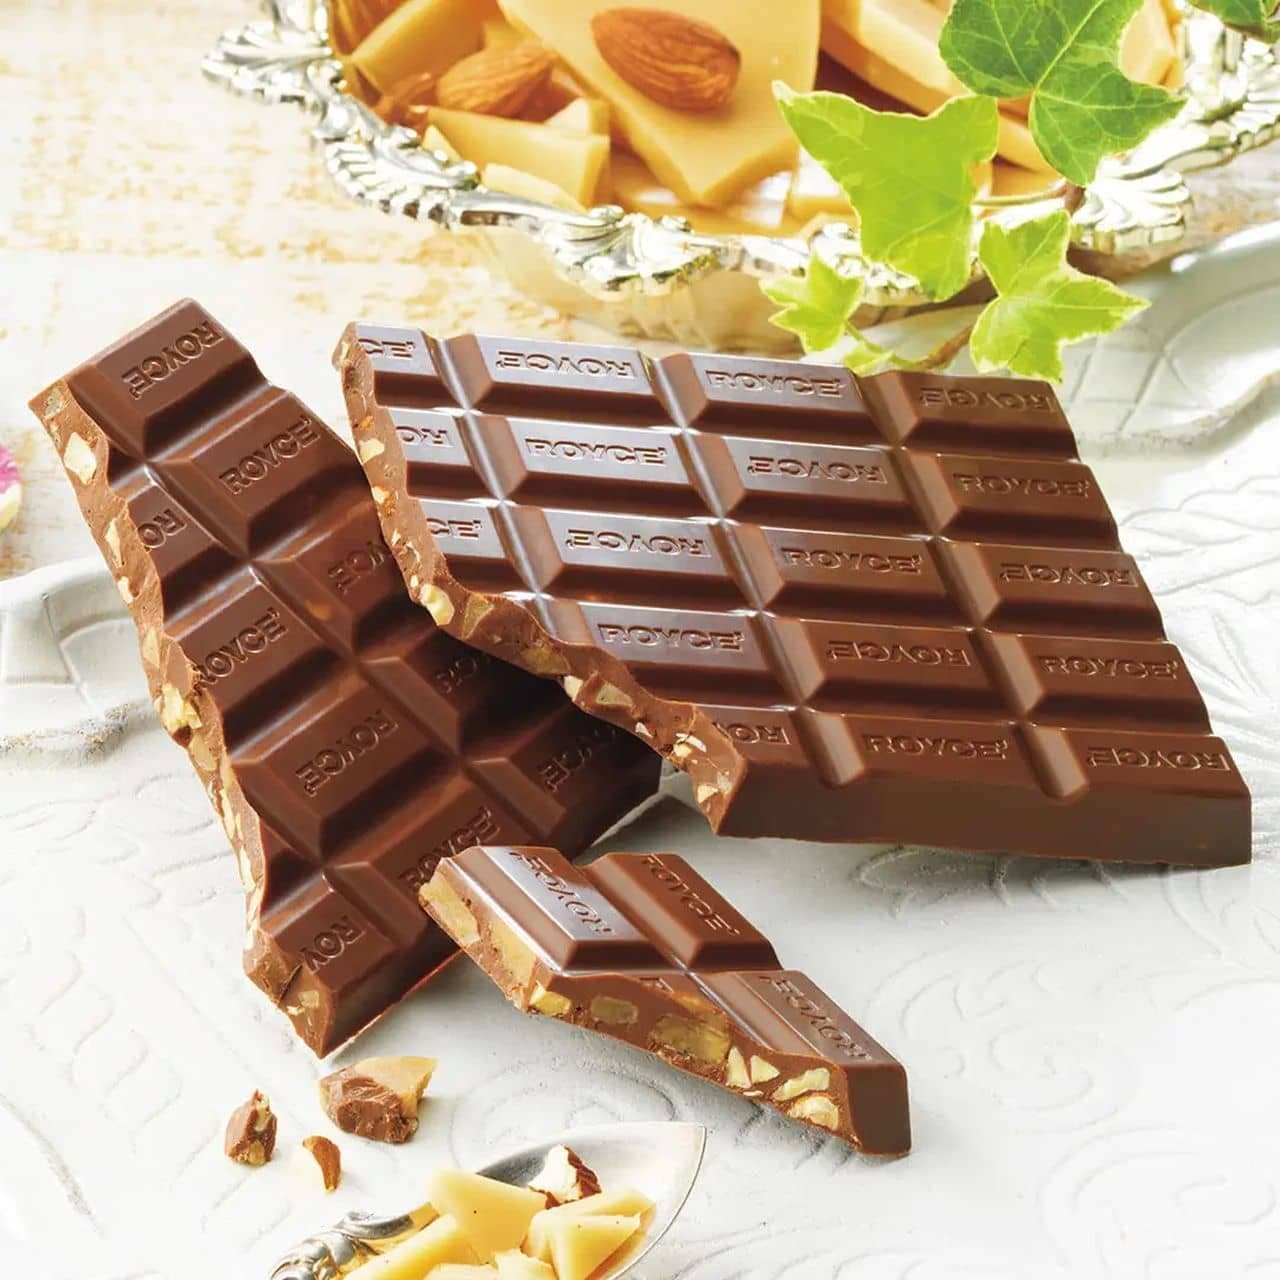 Lloyds "Chocolate Board [Toffee & Almond]".